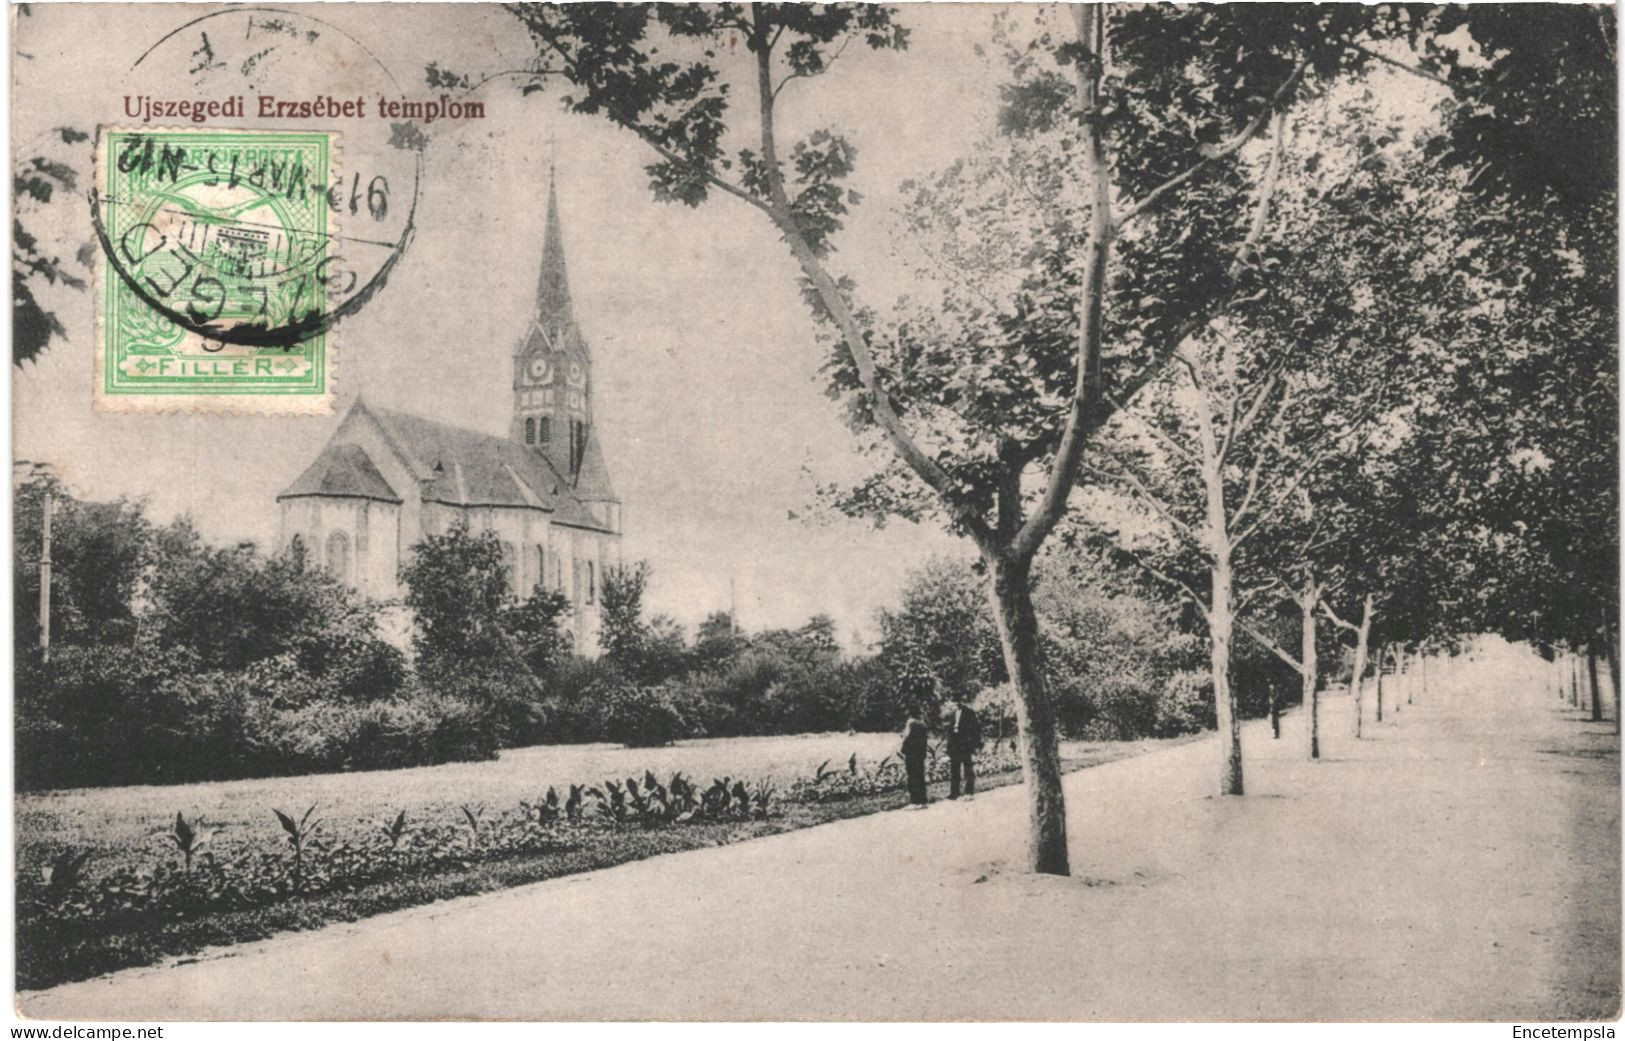 CPA Carte Postale Hongrie Szeged Ujszegedi Erzsébet Templom VM80825ok - Hongrie